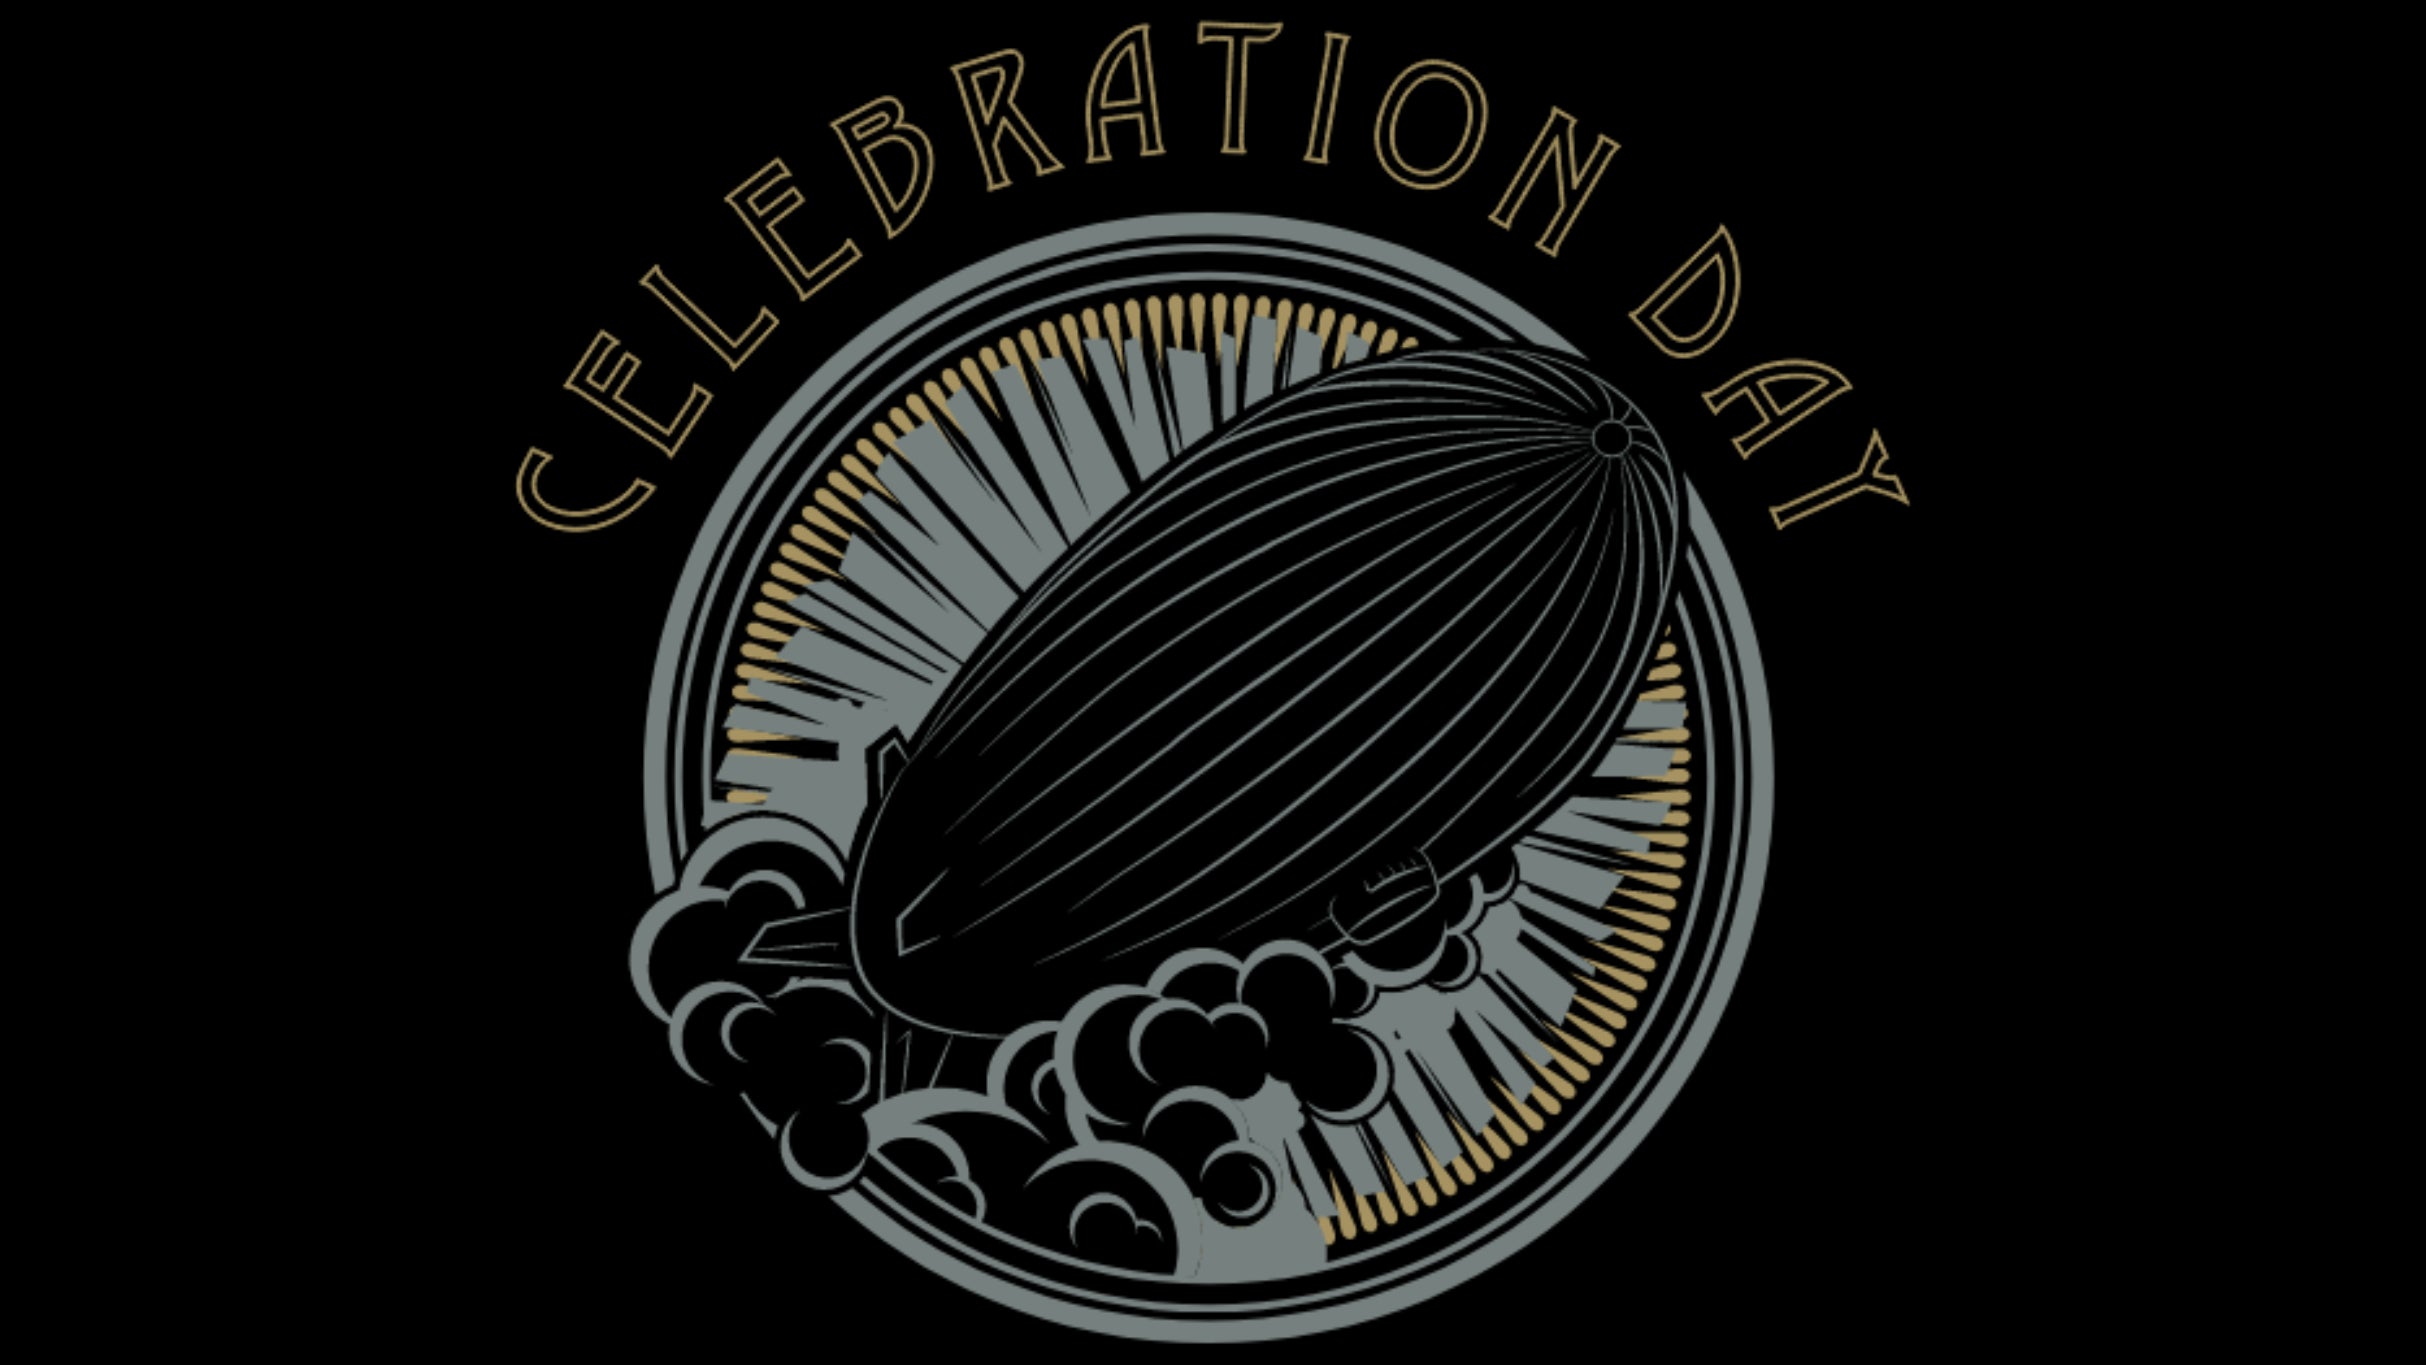 Celebration Day - A KSHE 95 Rock And Roll Fantasy